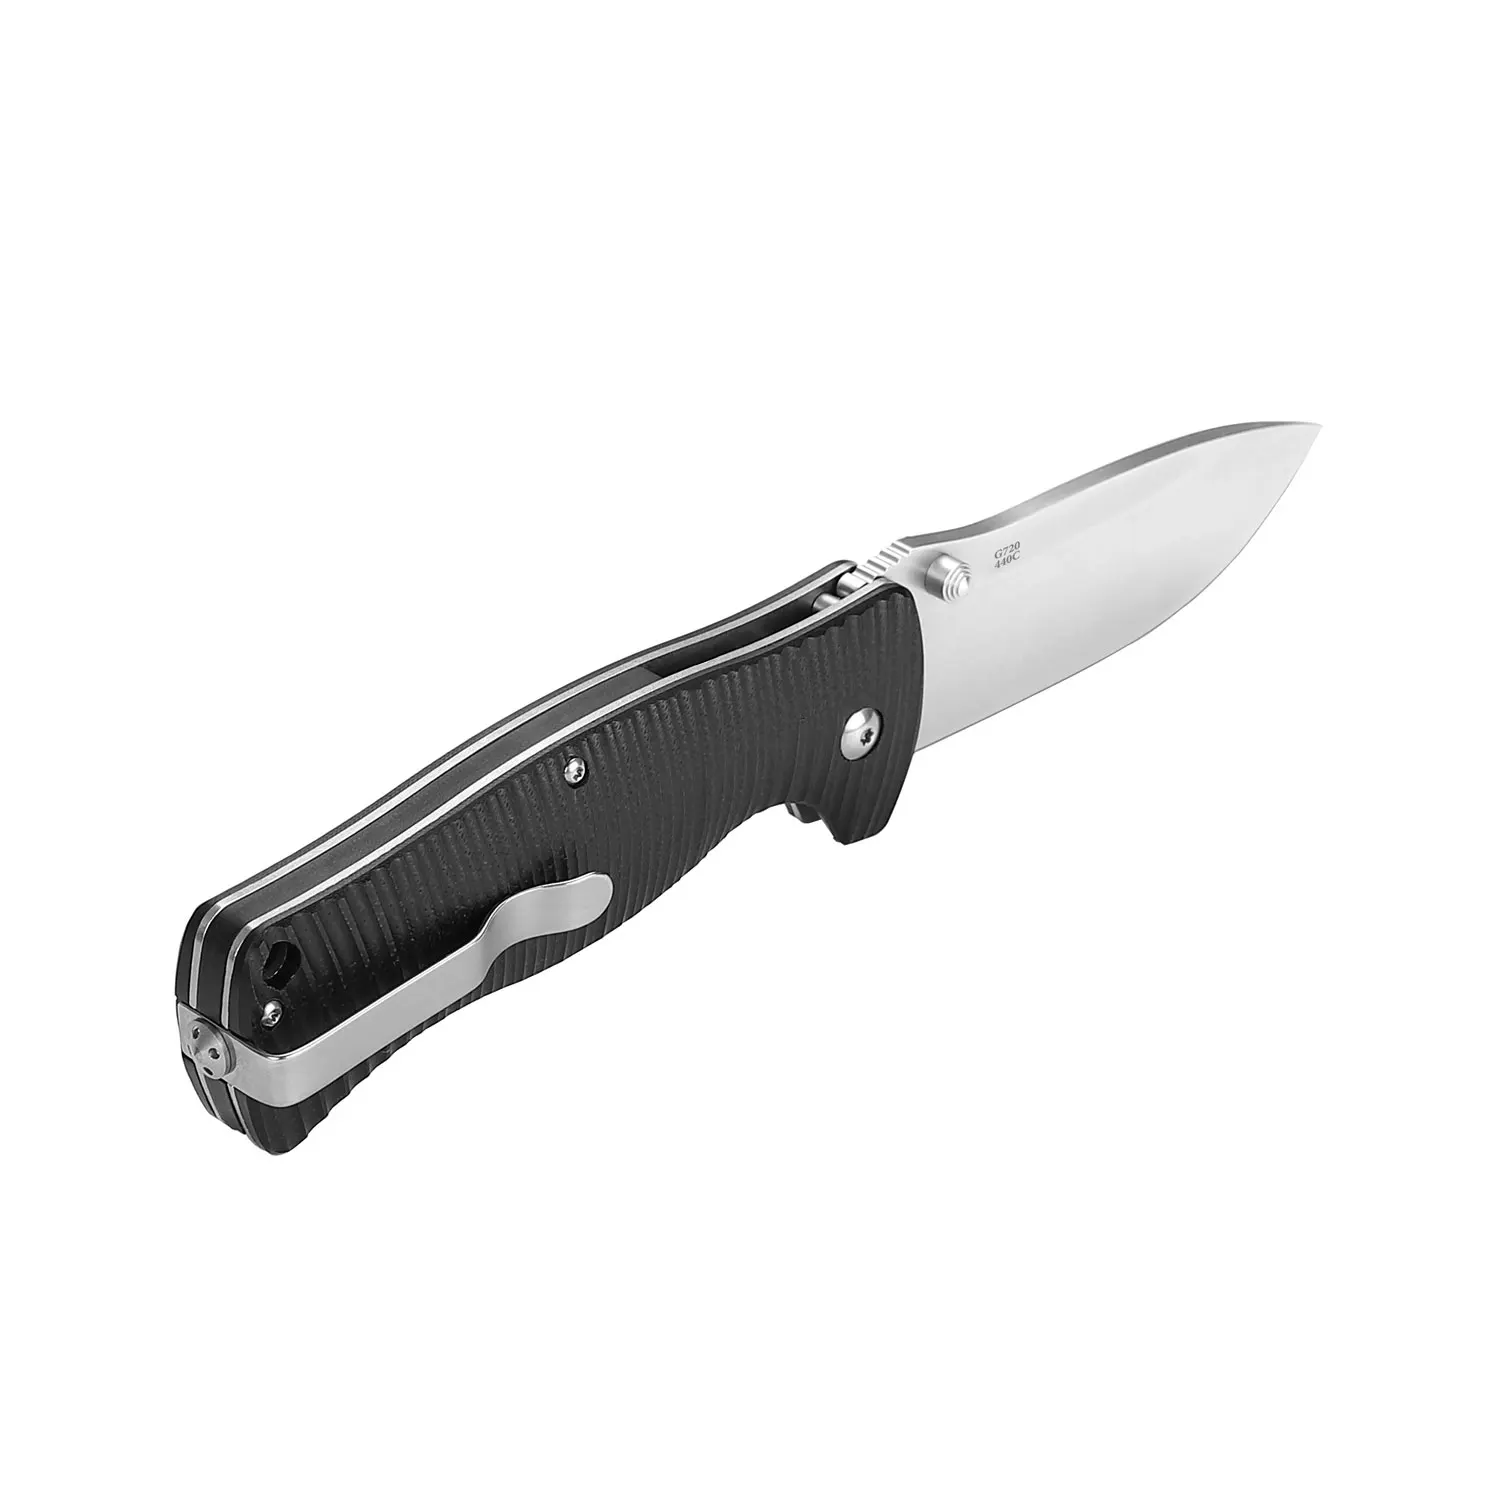 Firebird Ganzo G720 Firebird F720 G10 Handle Folding knife Survival Camping  tool Hunting Pocket Knife tactical edc outdoor tool|Knives| - AliExpress